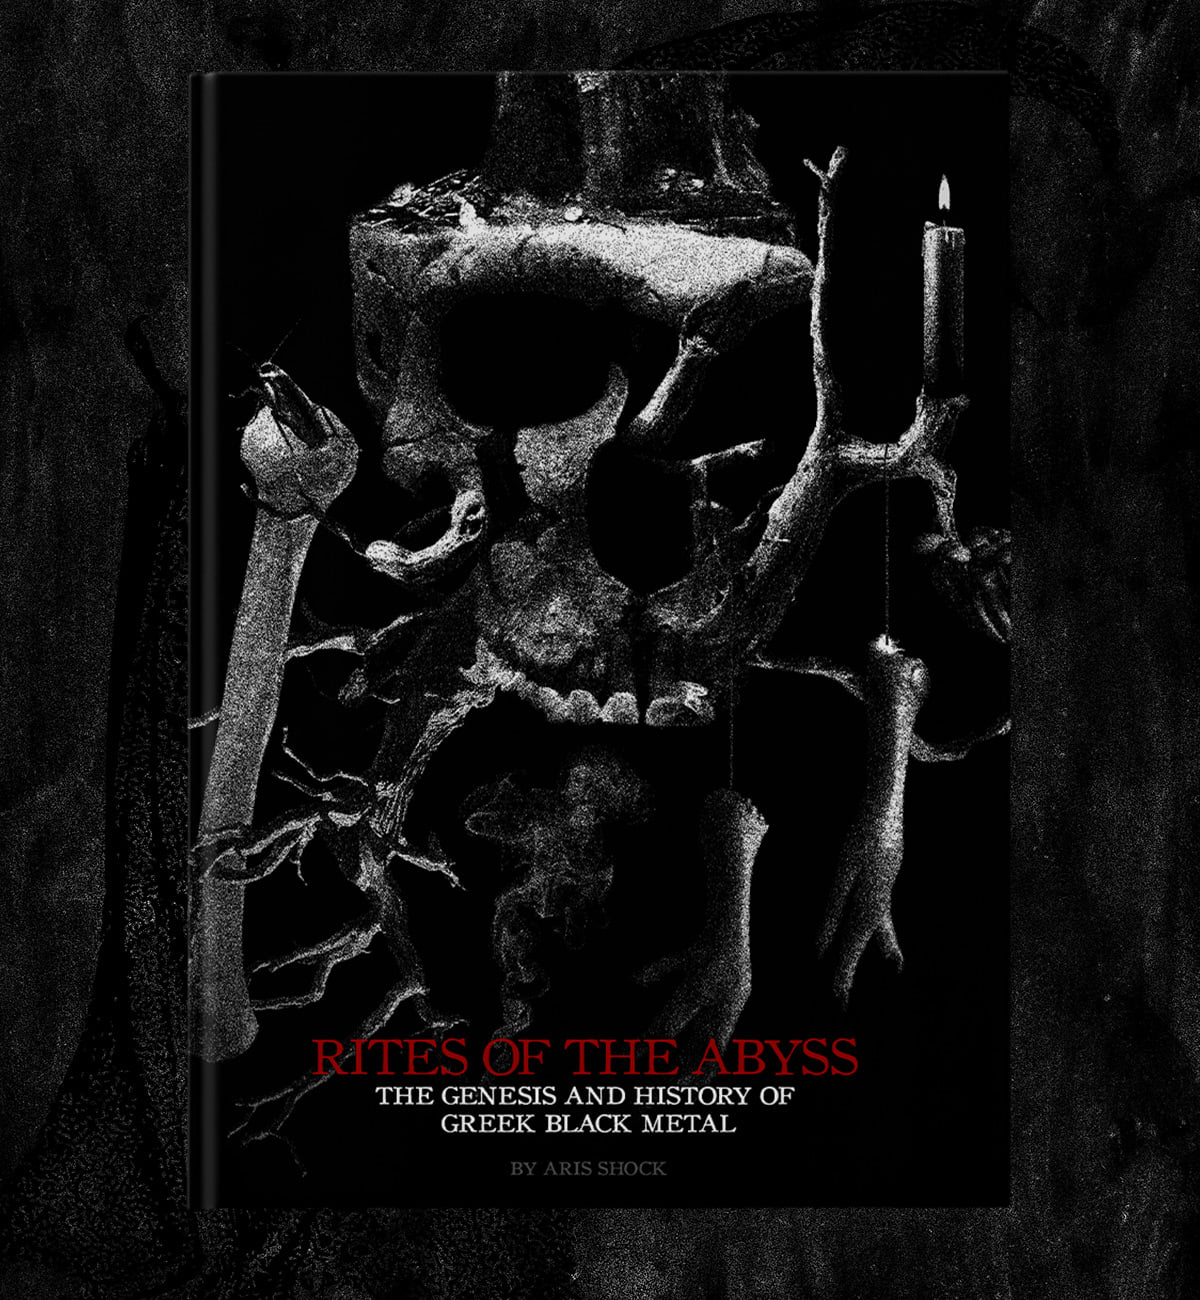 You are currently viewing Η Heavy Music Artwork πρόκειται να κυκλοφορήσει ένα βιβλίο για την ιστορία της ελληνικής Black Metal σκηνής!